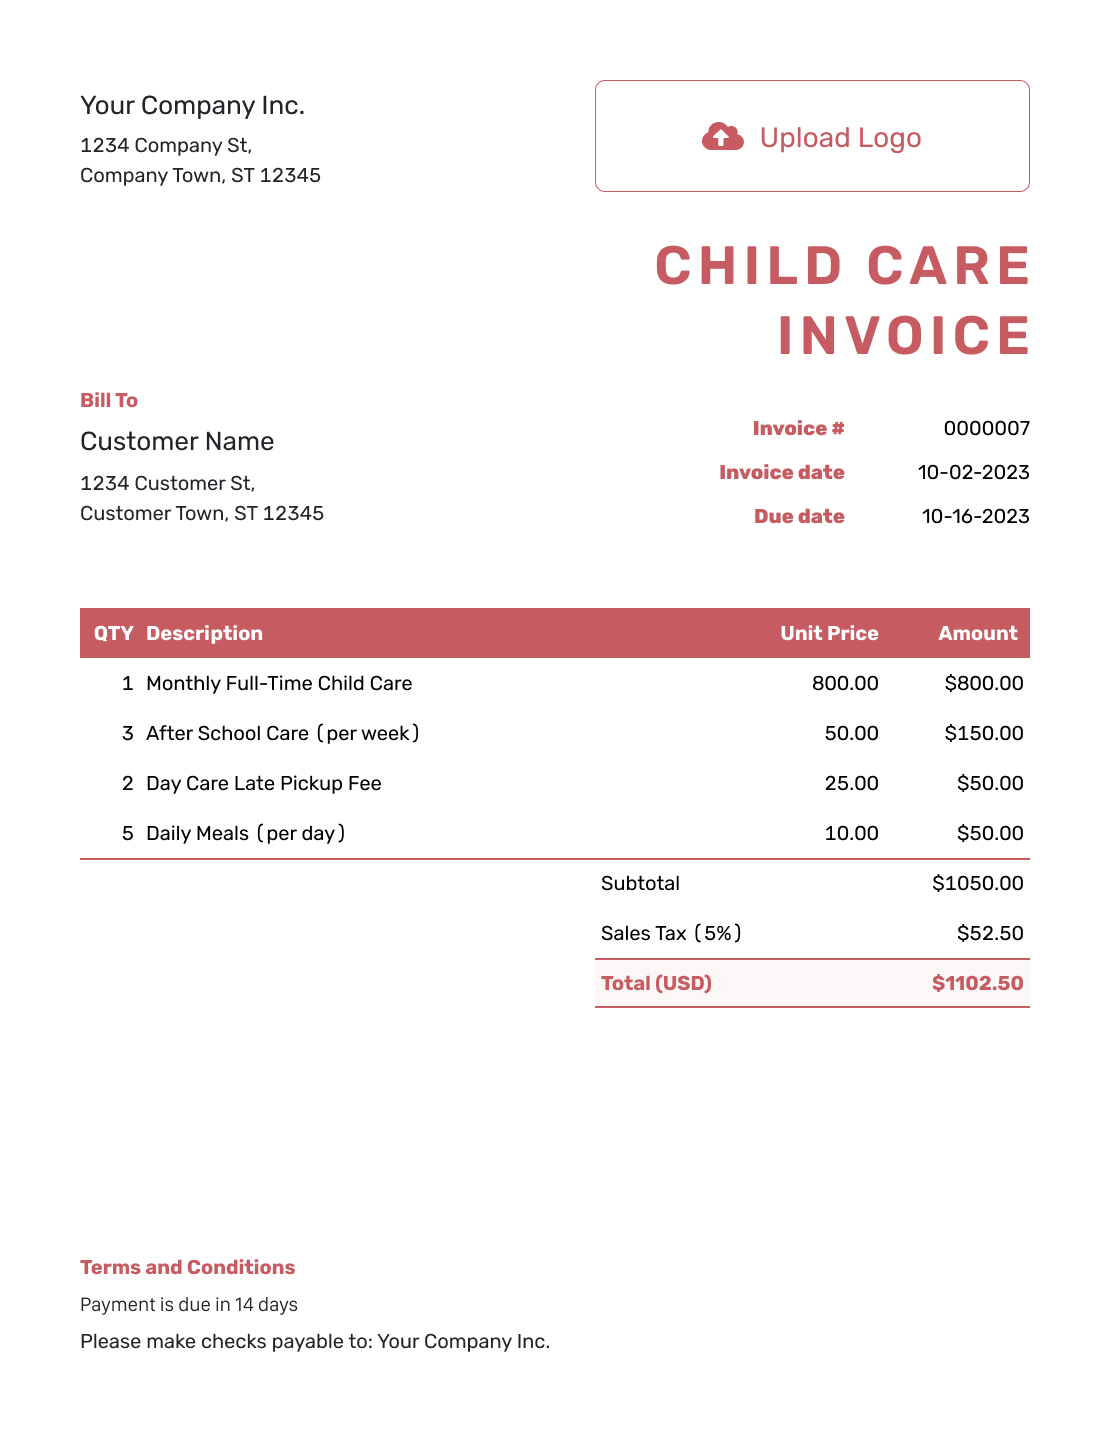 Itemized Child Care Invoice Template